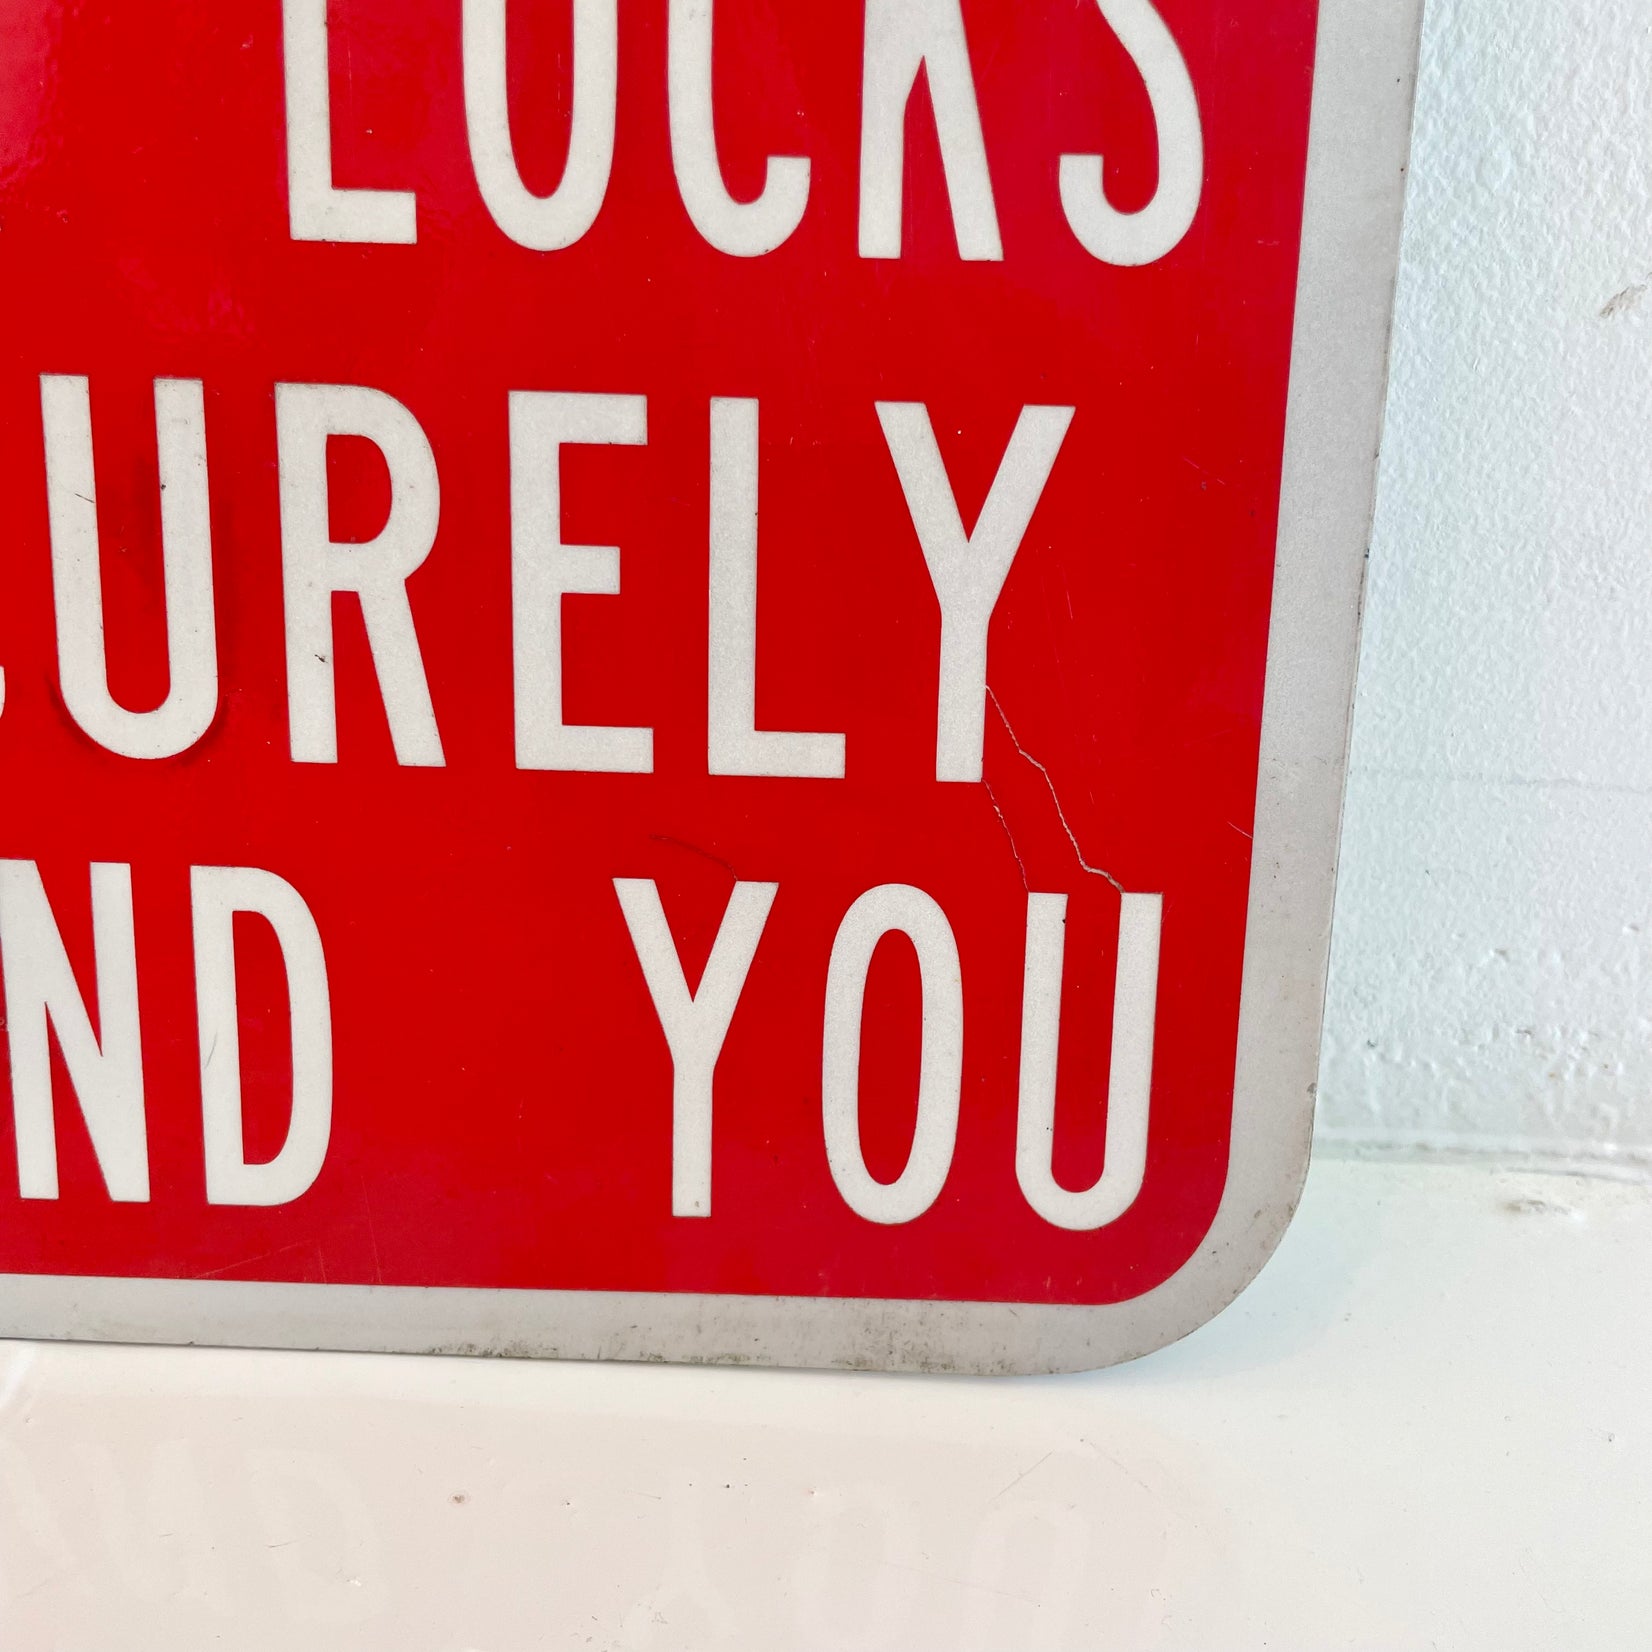 Vintage Make Sure Door Locks Sign